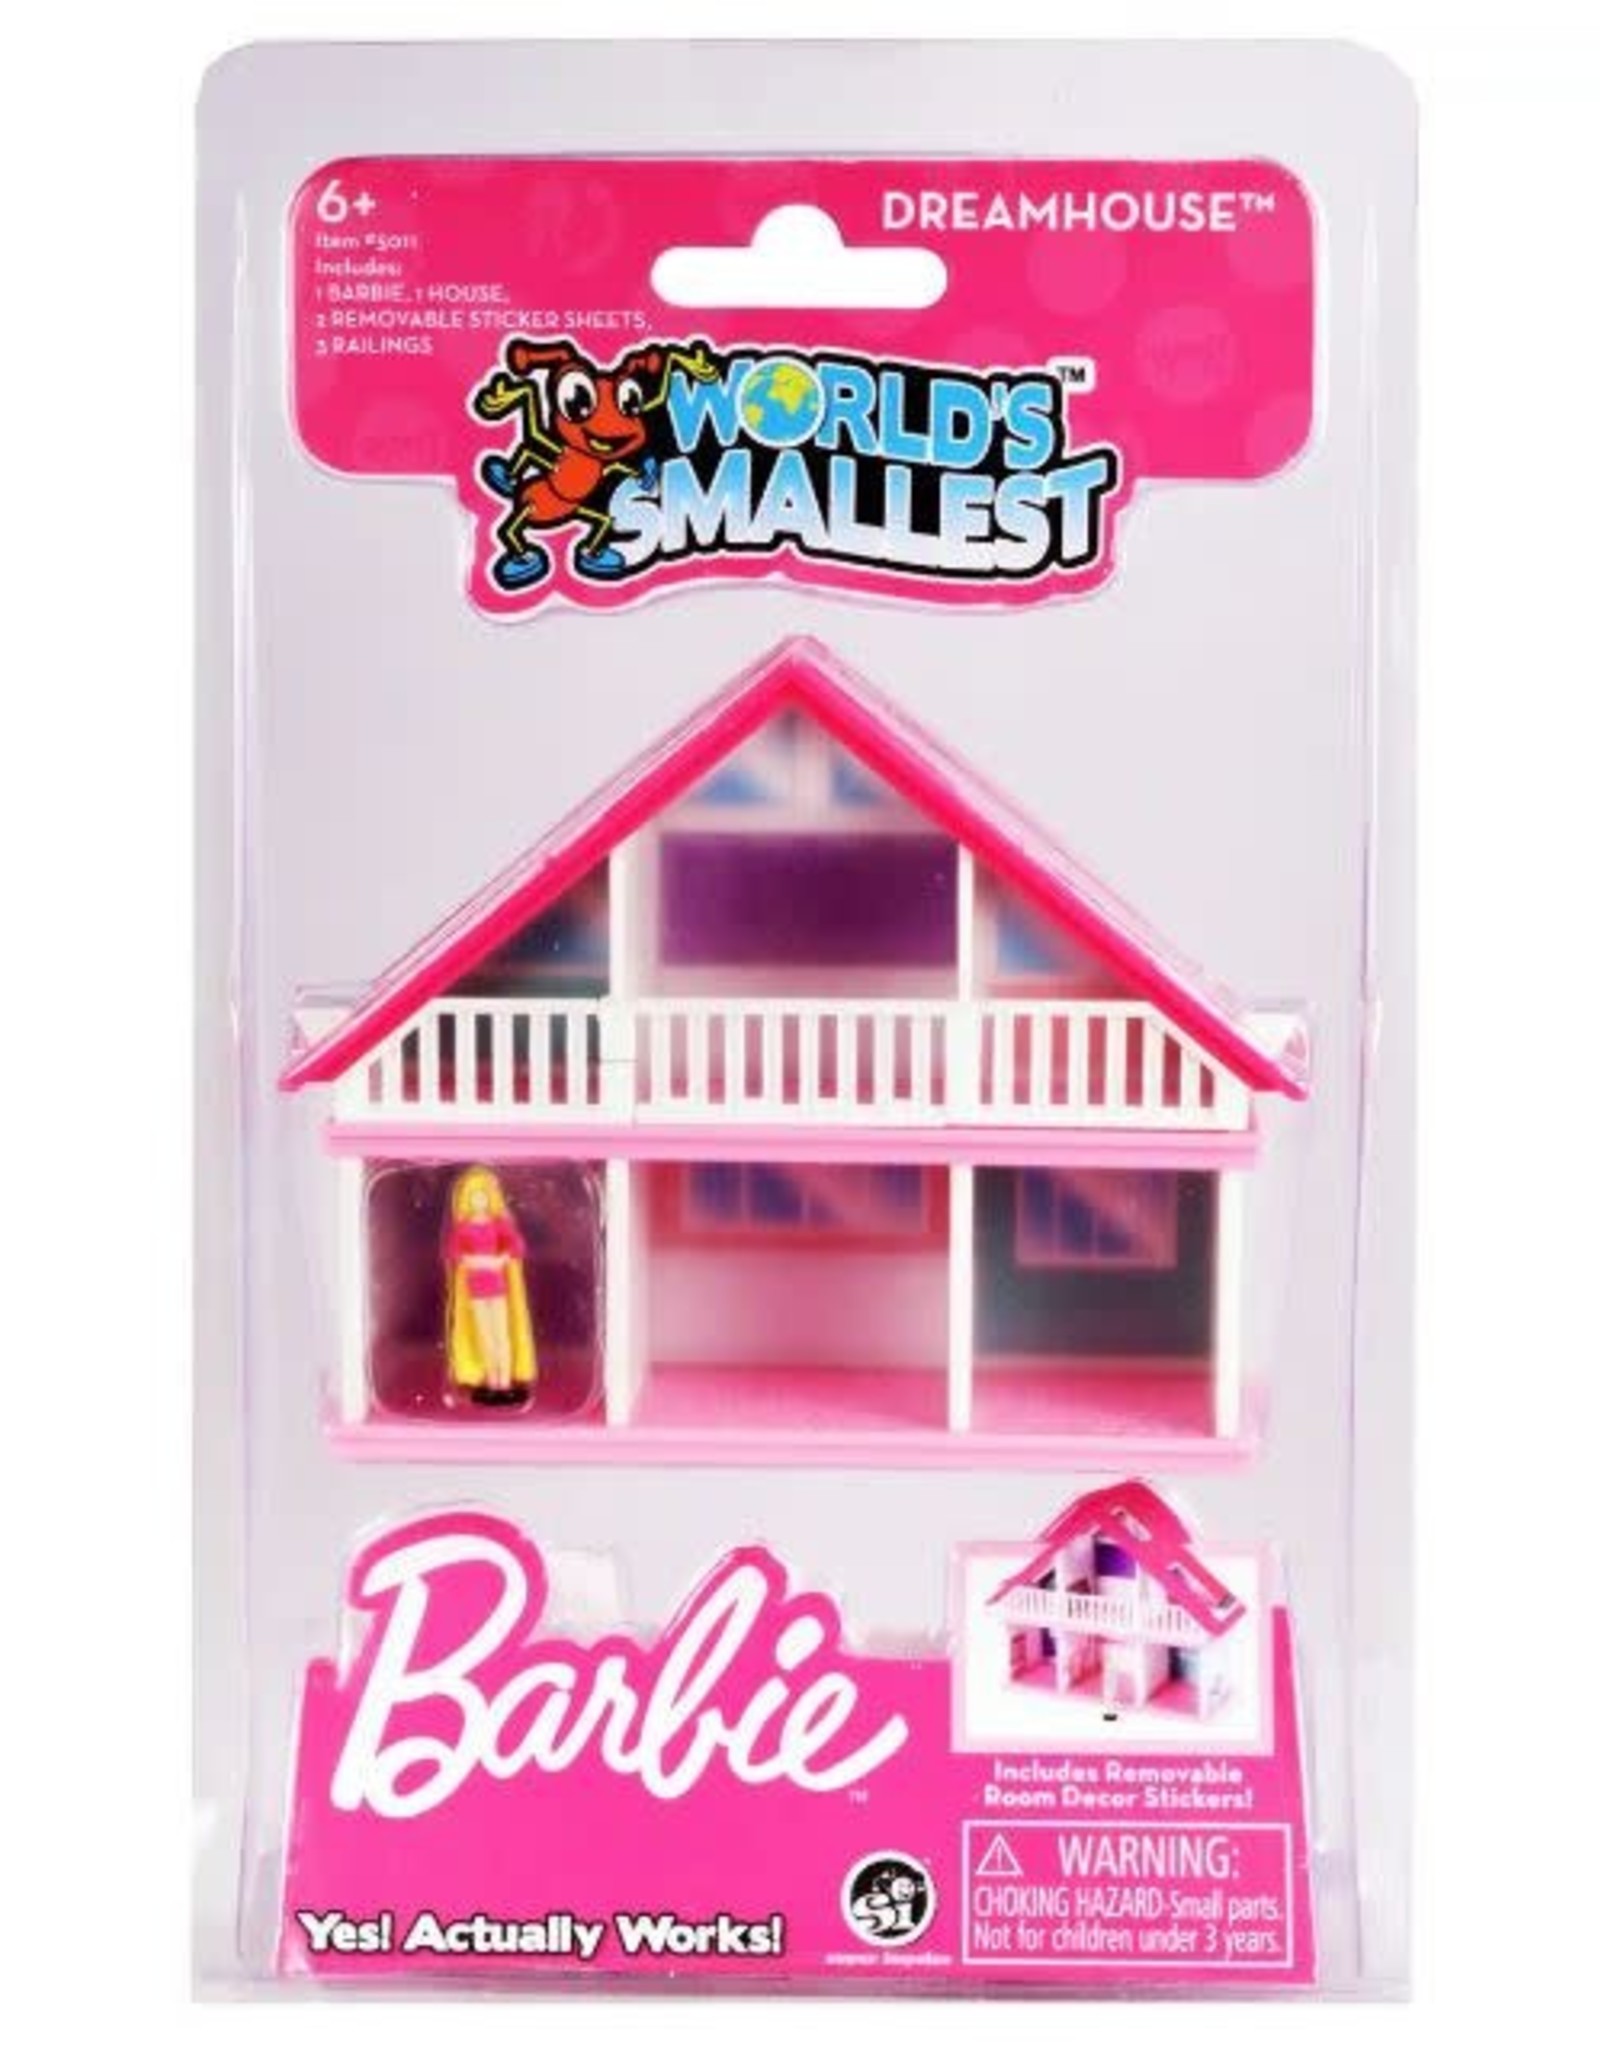 World's Smallest World's Smallest Barbie Dream House